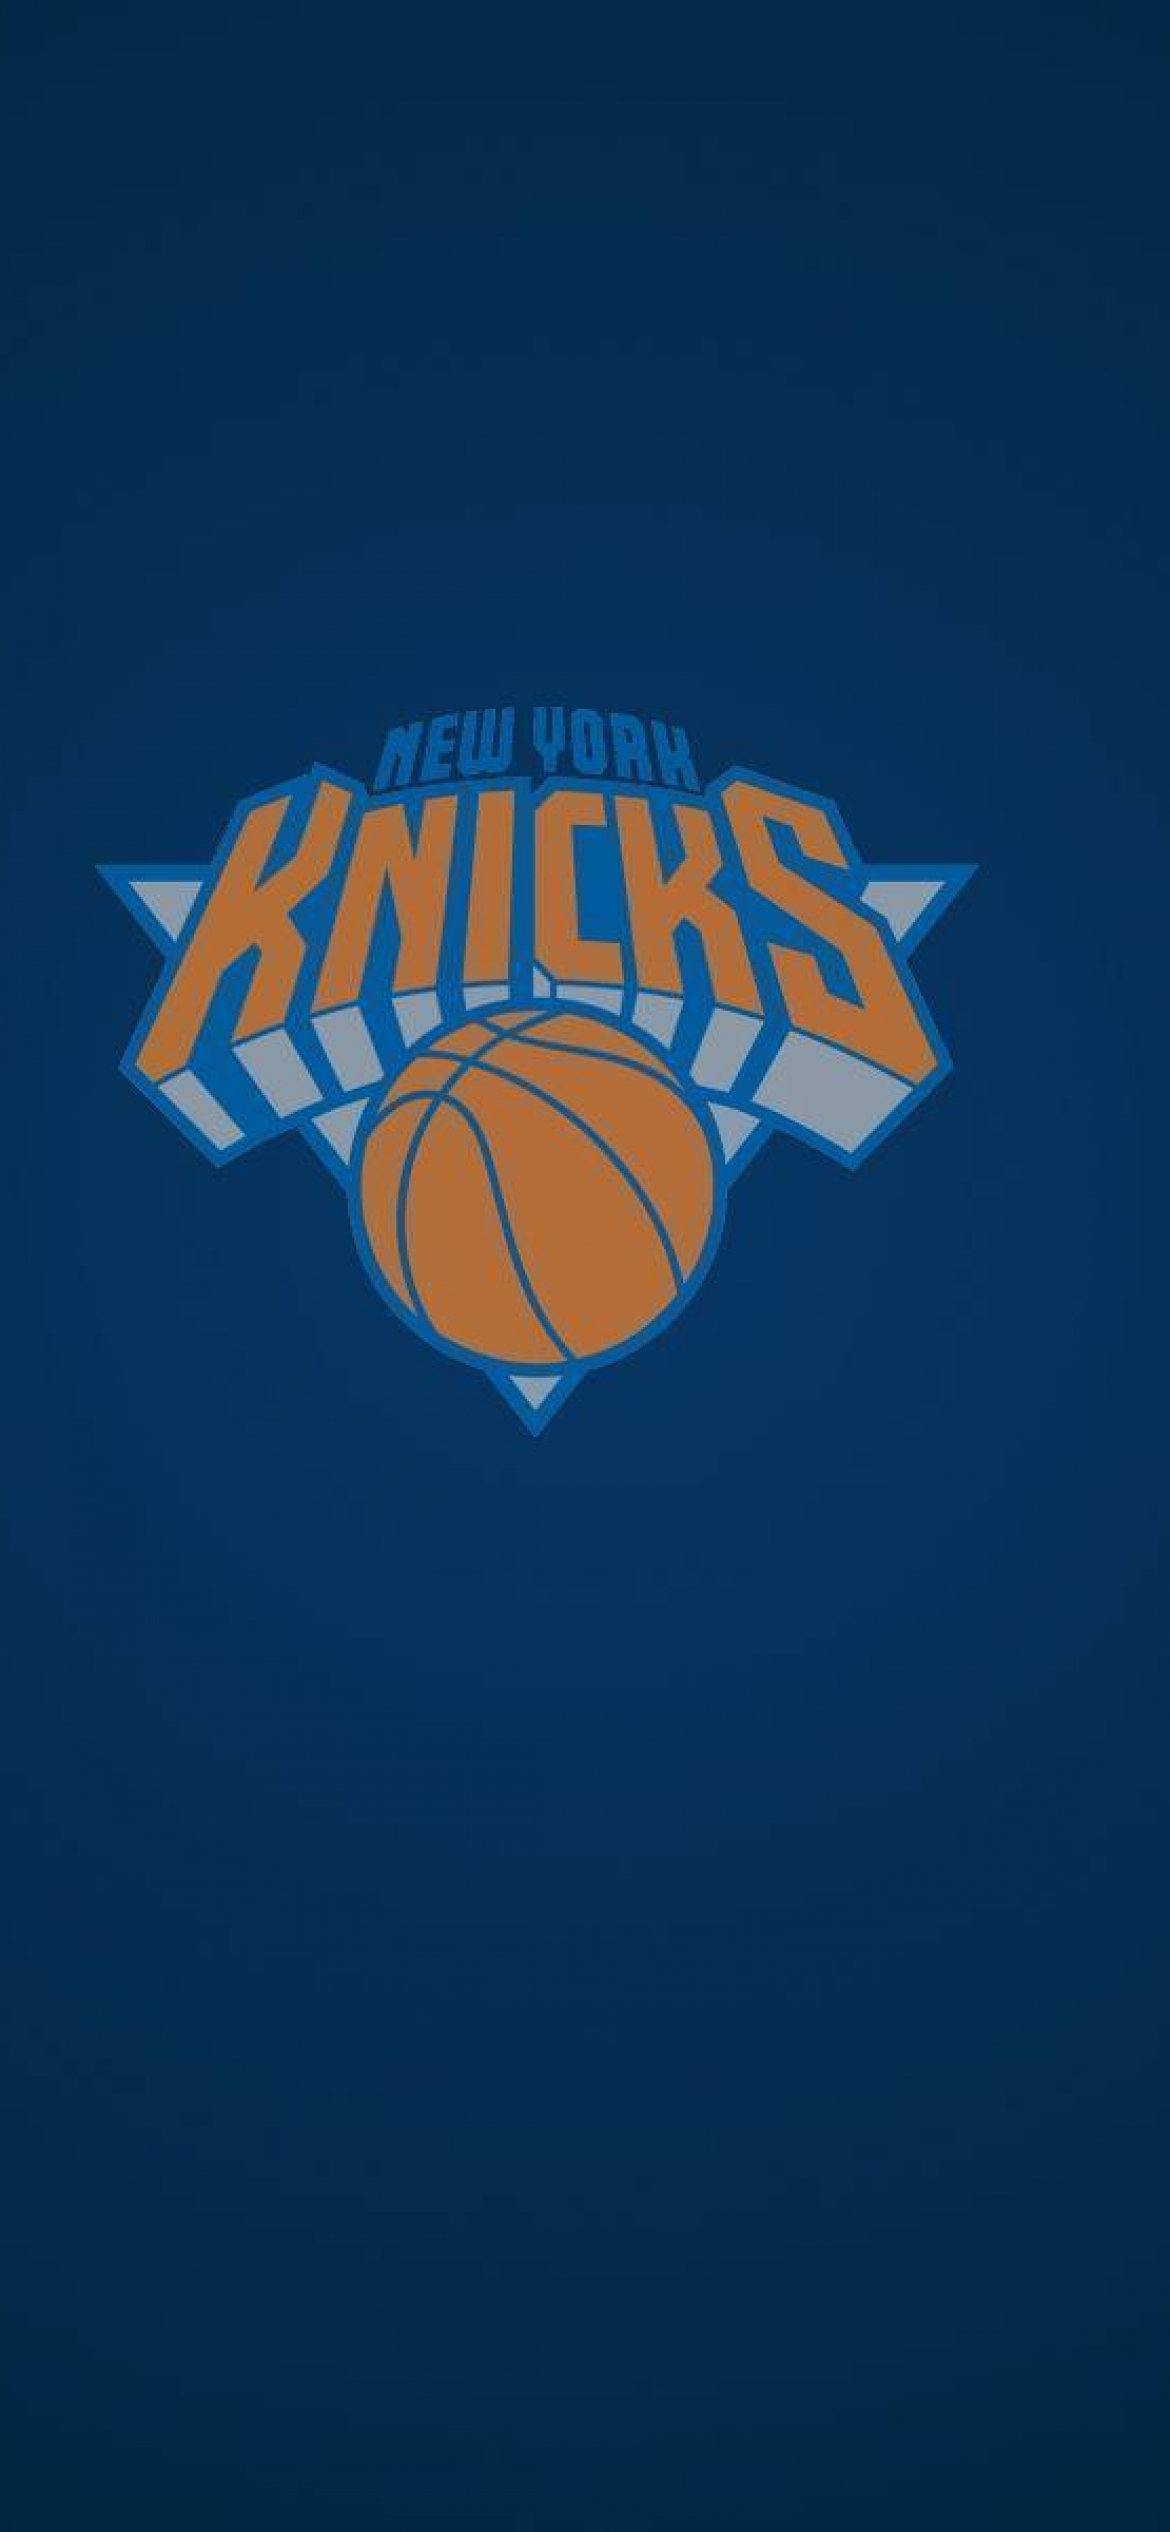 New York Knicks wallpaper by JeremyNeal1  Download on ZEDGE  d192